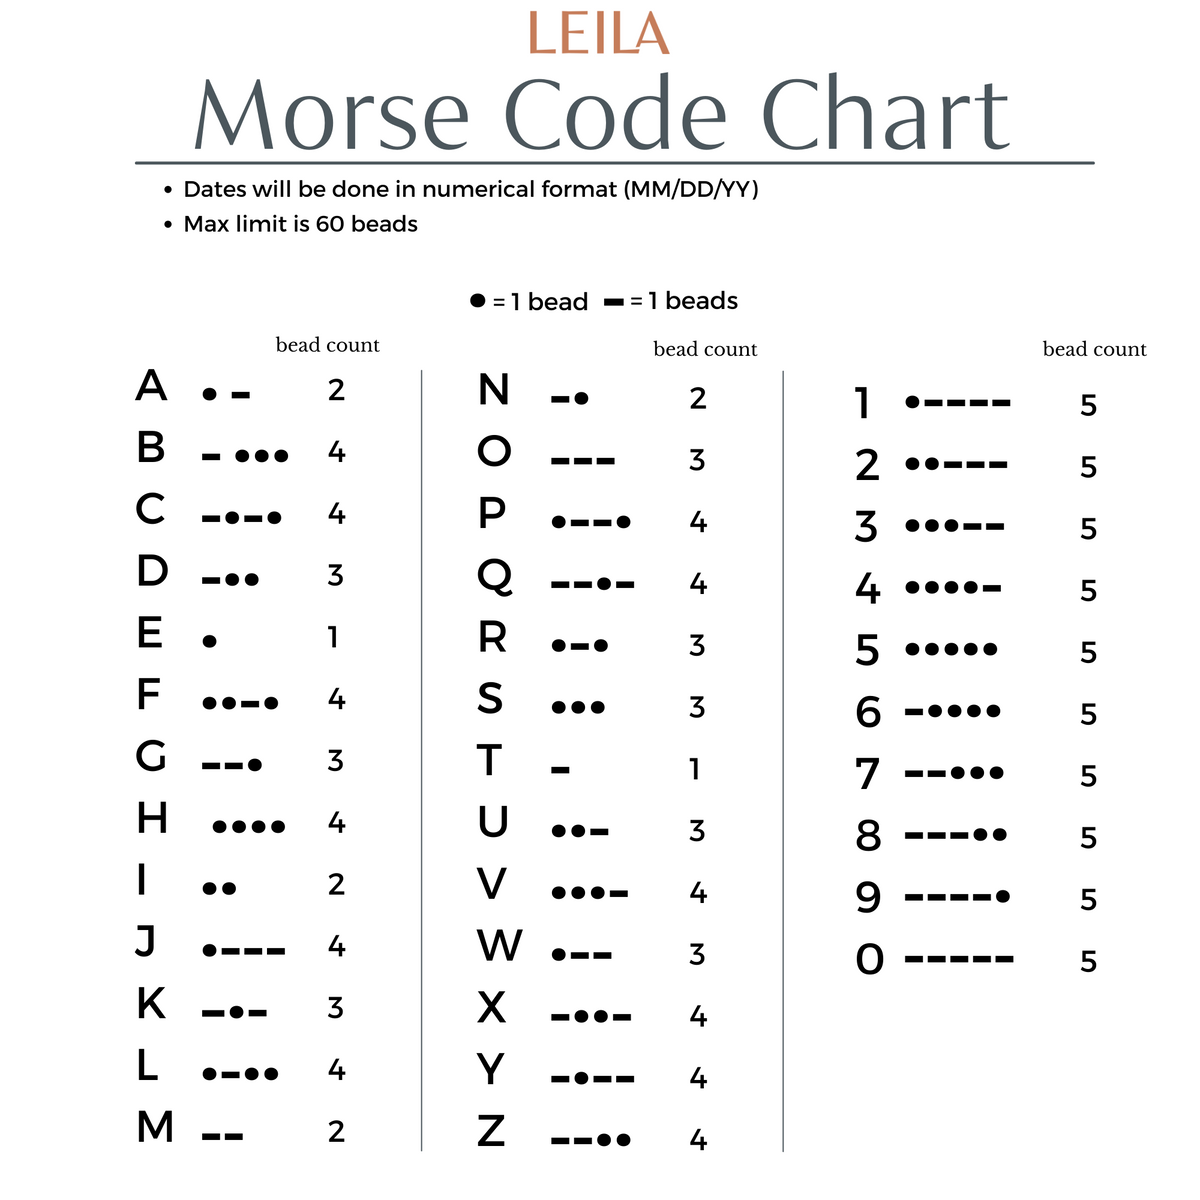 Silver Morse Code Bracelet